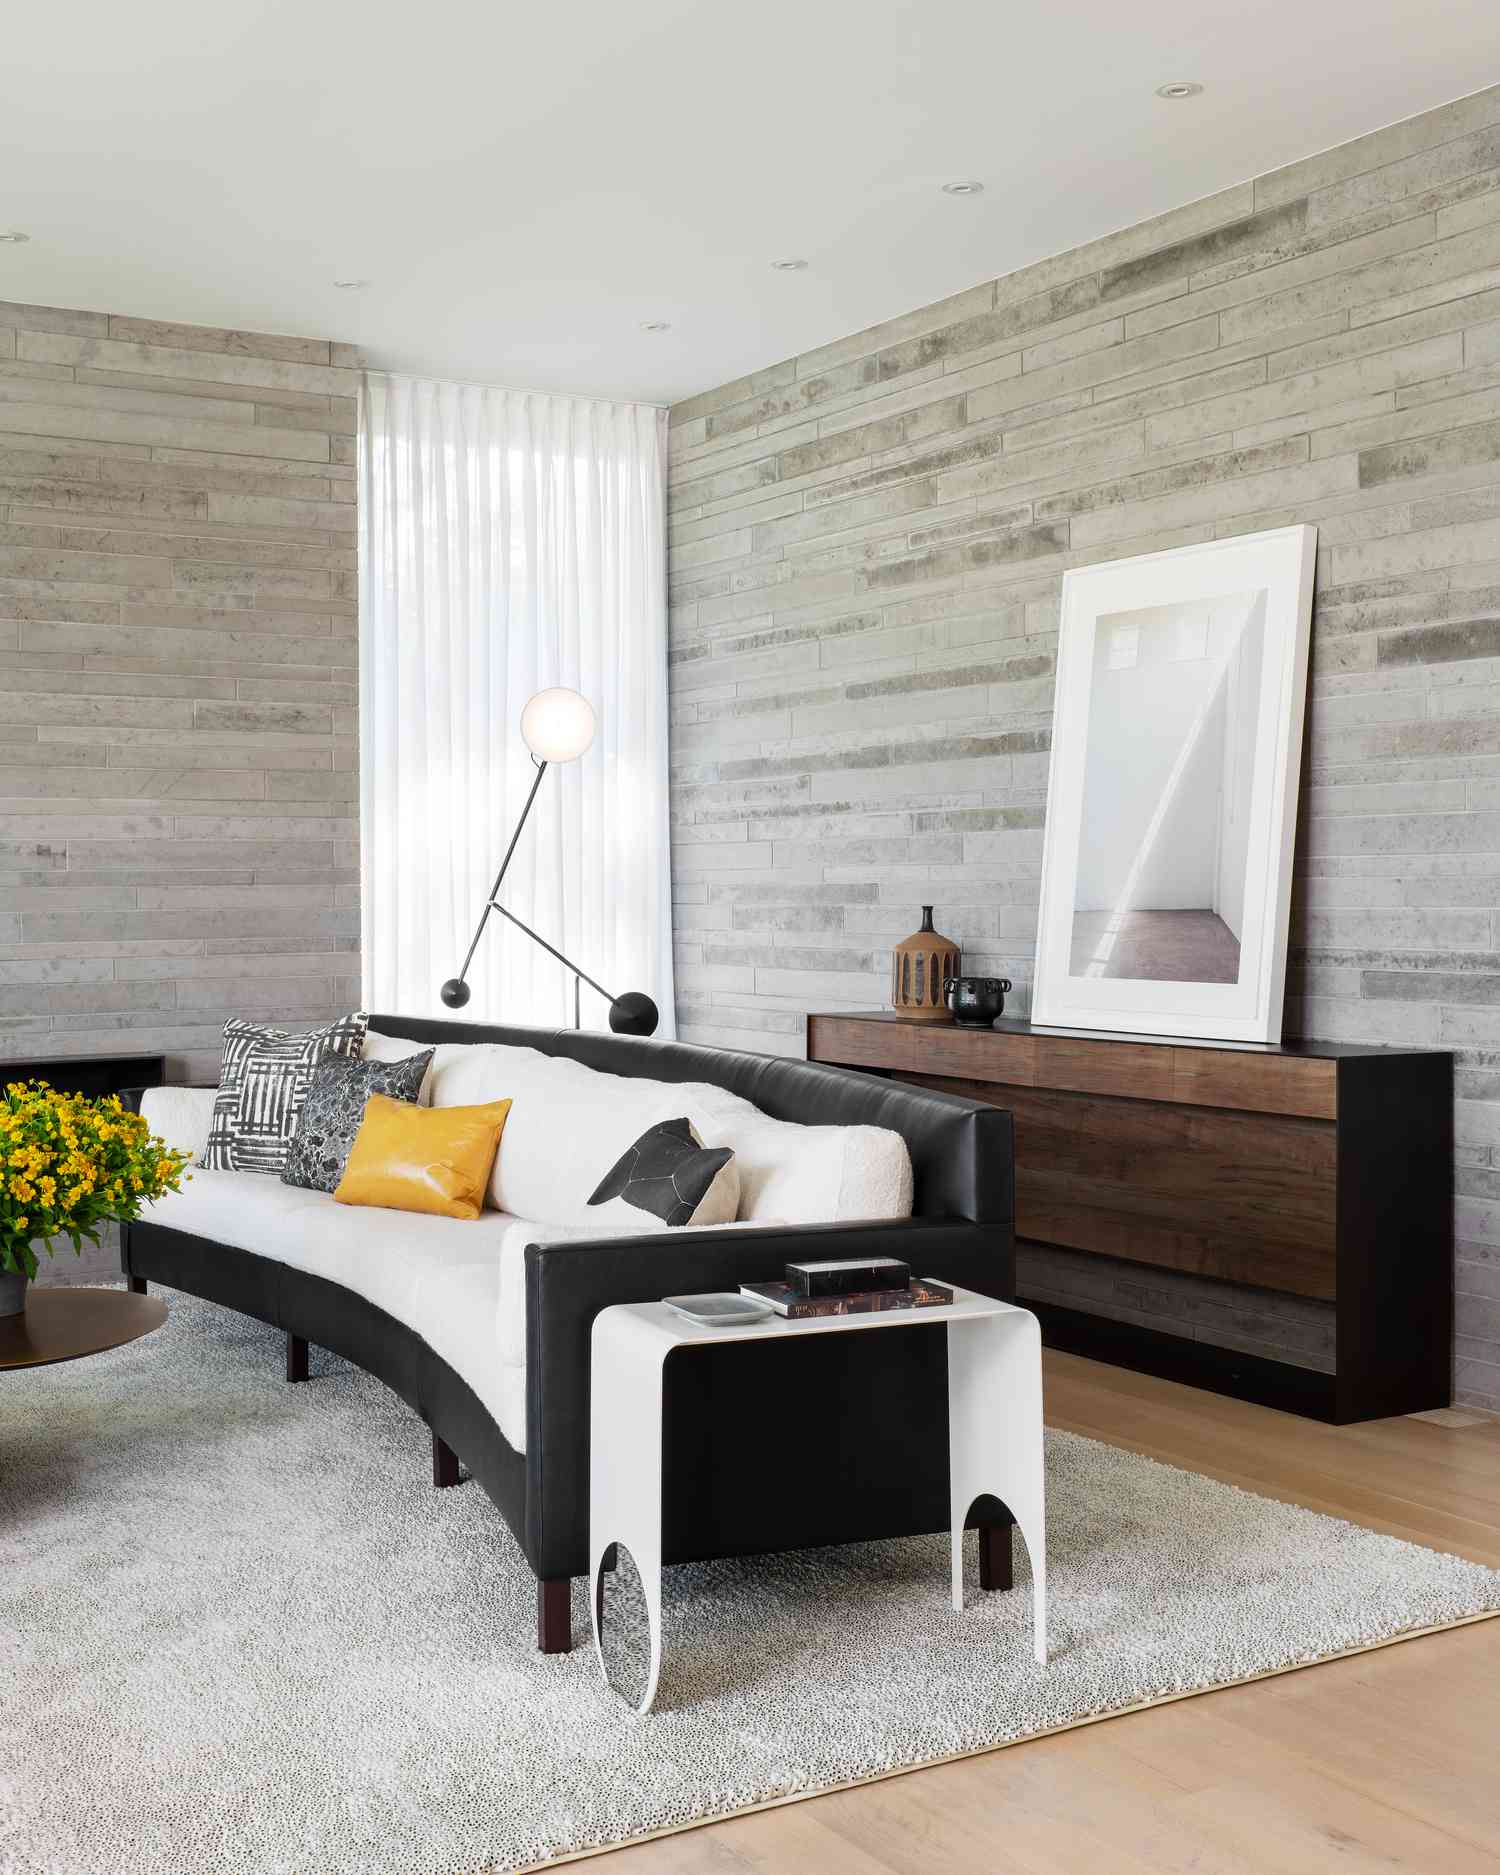 jean liu design of living room